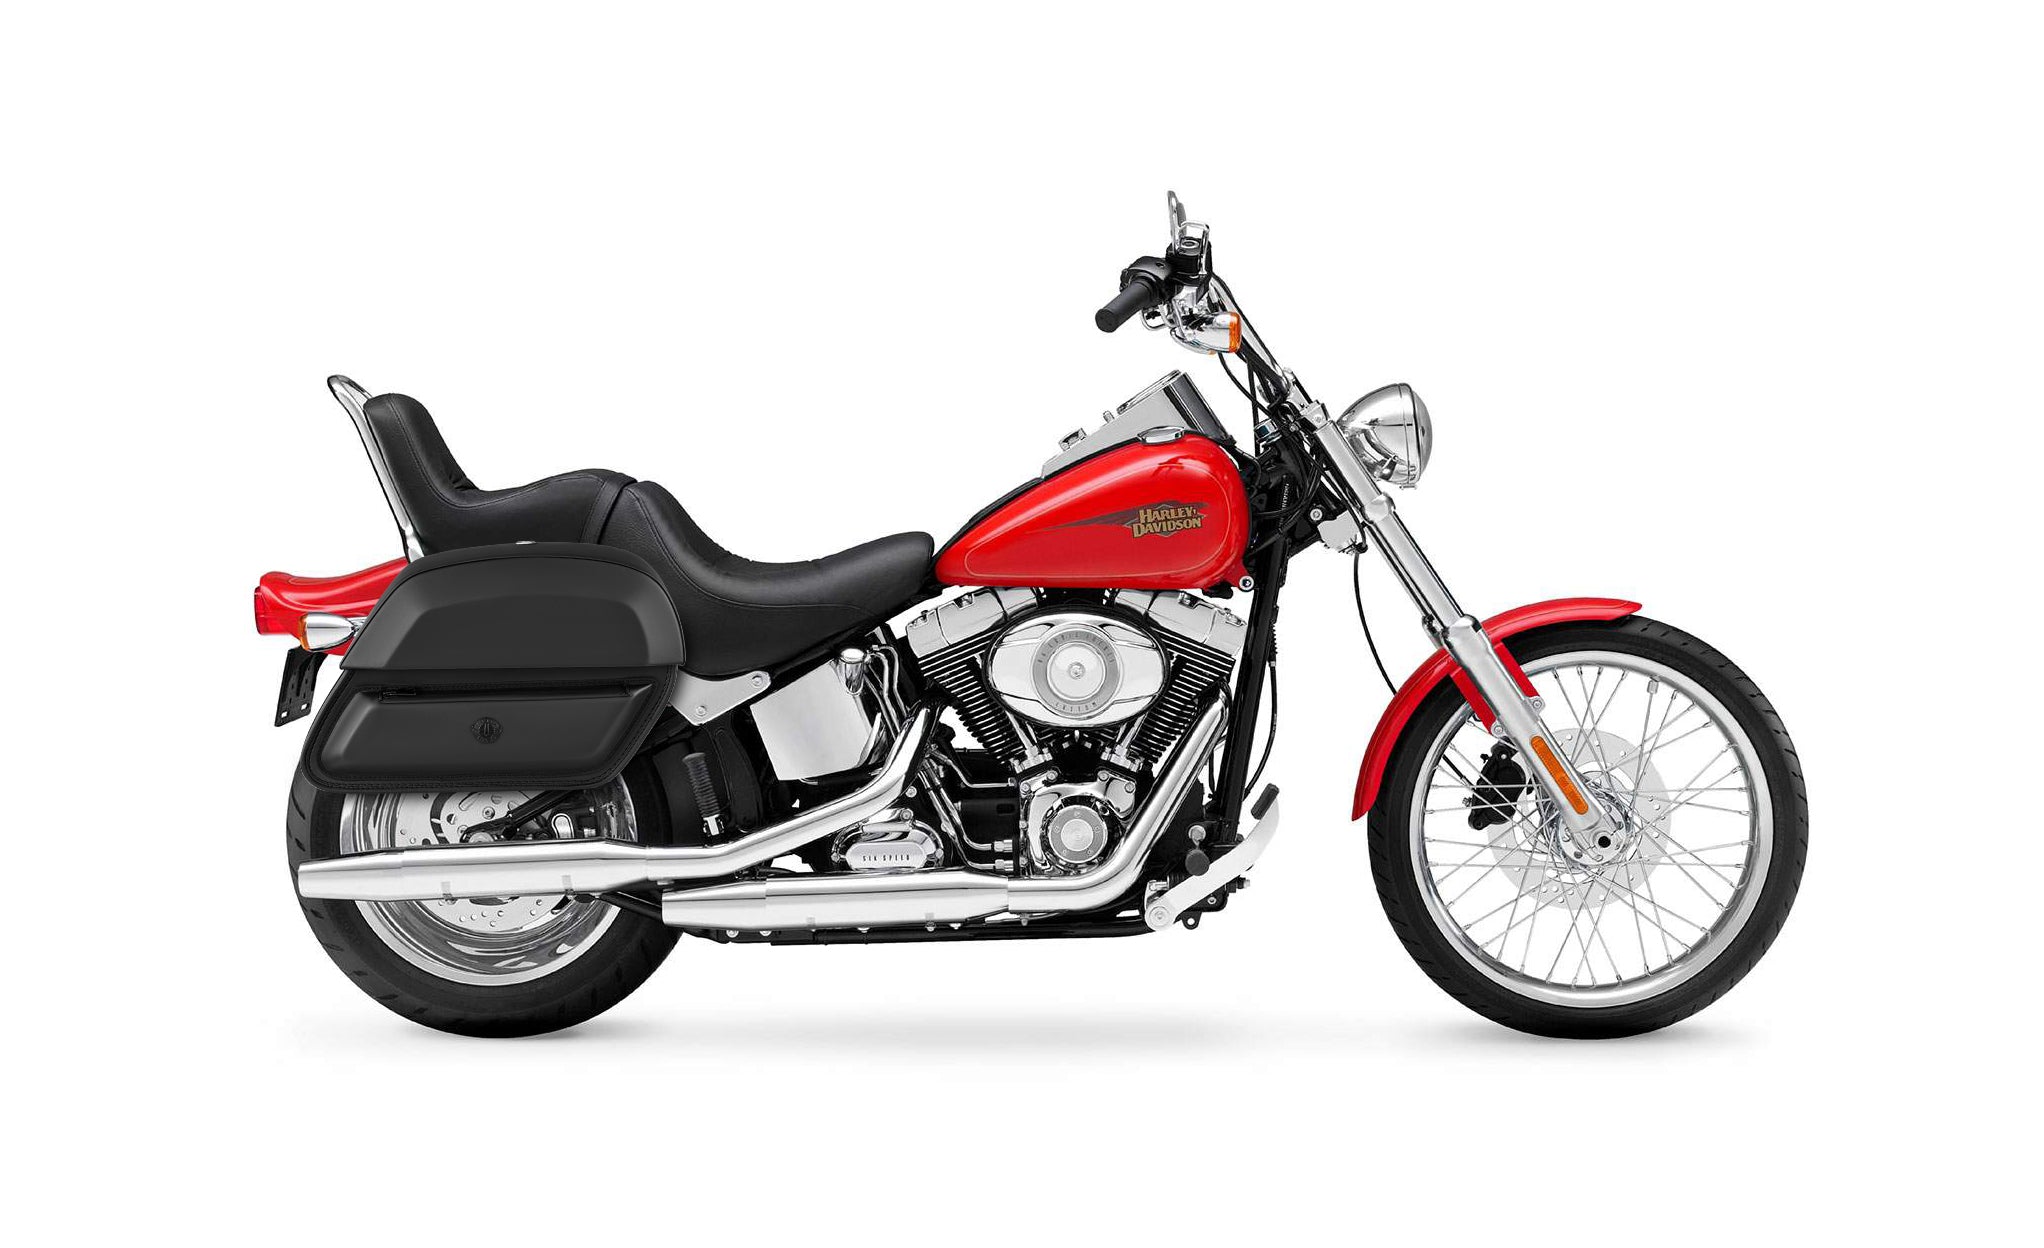 28L - Wraith Medium Leather Saddlebags for Harley Softail Custom FXSTC BAG on Bike View @expand